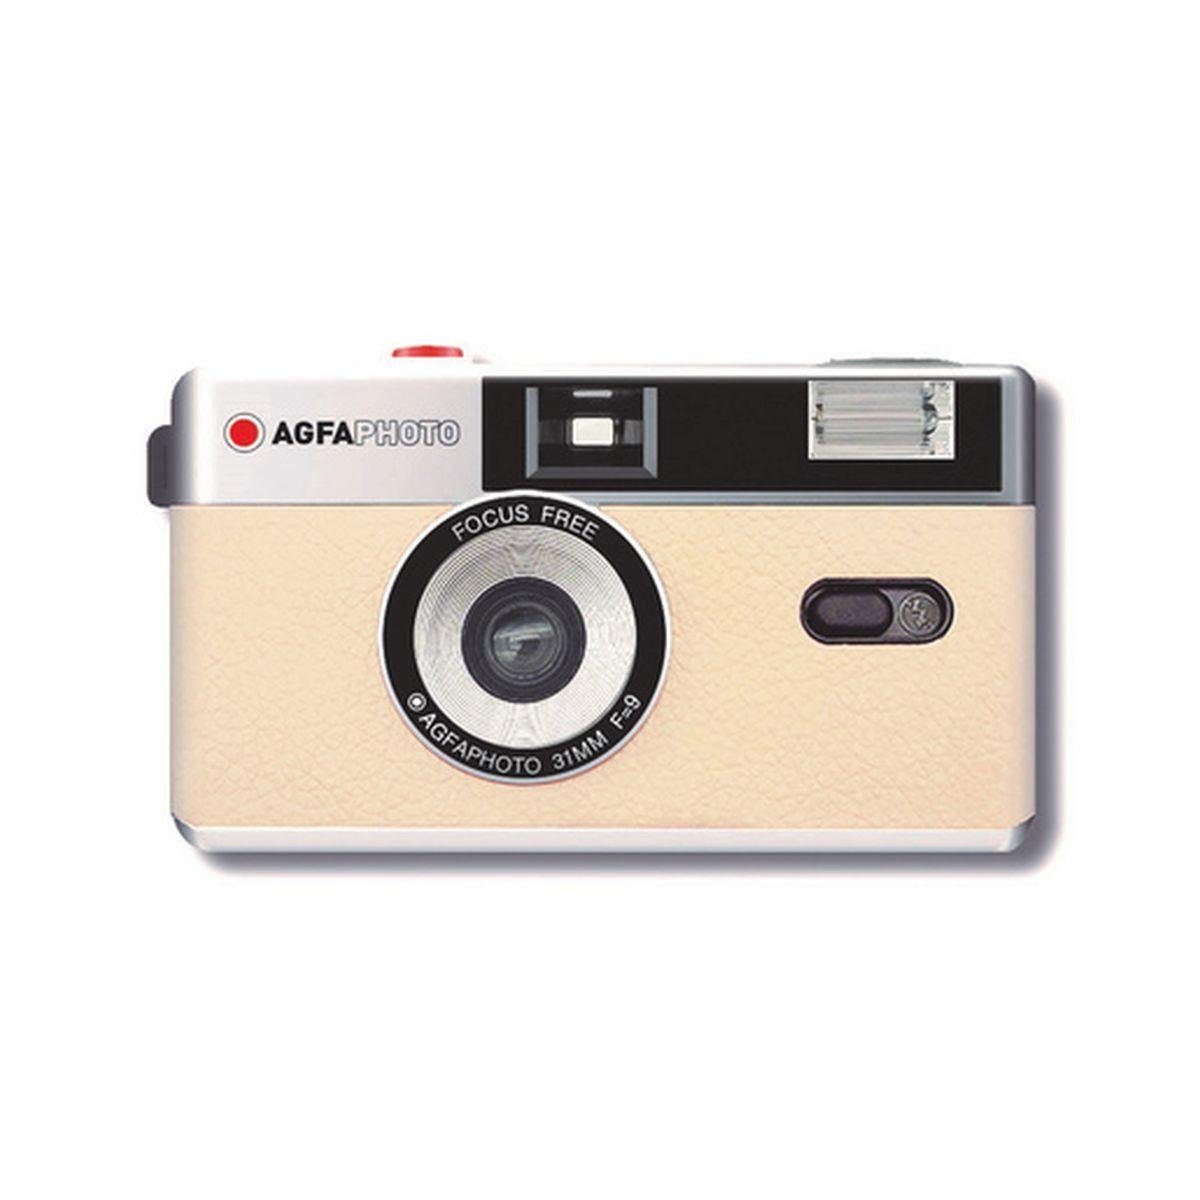 Camera Kompaktkamera Reusable AgfaPhoto beige Photo